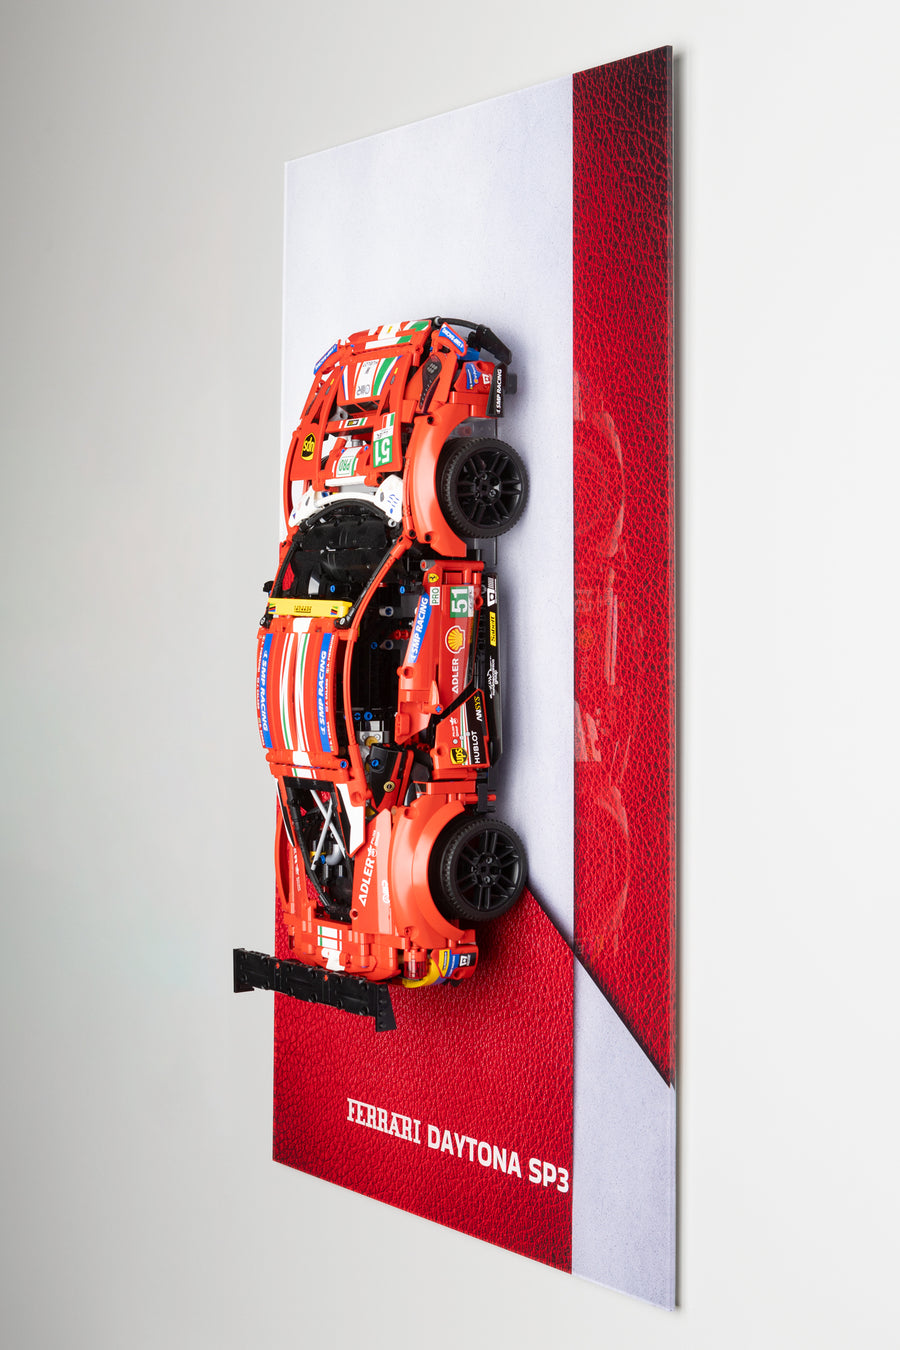 Wall Hanging Car Frame - Ferrari Daytona SP3 (42143)